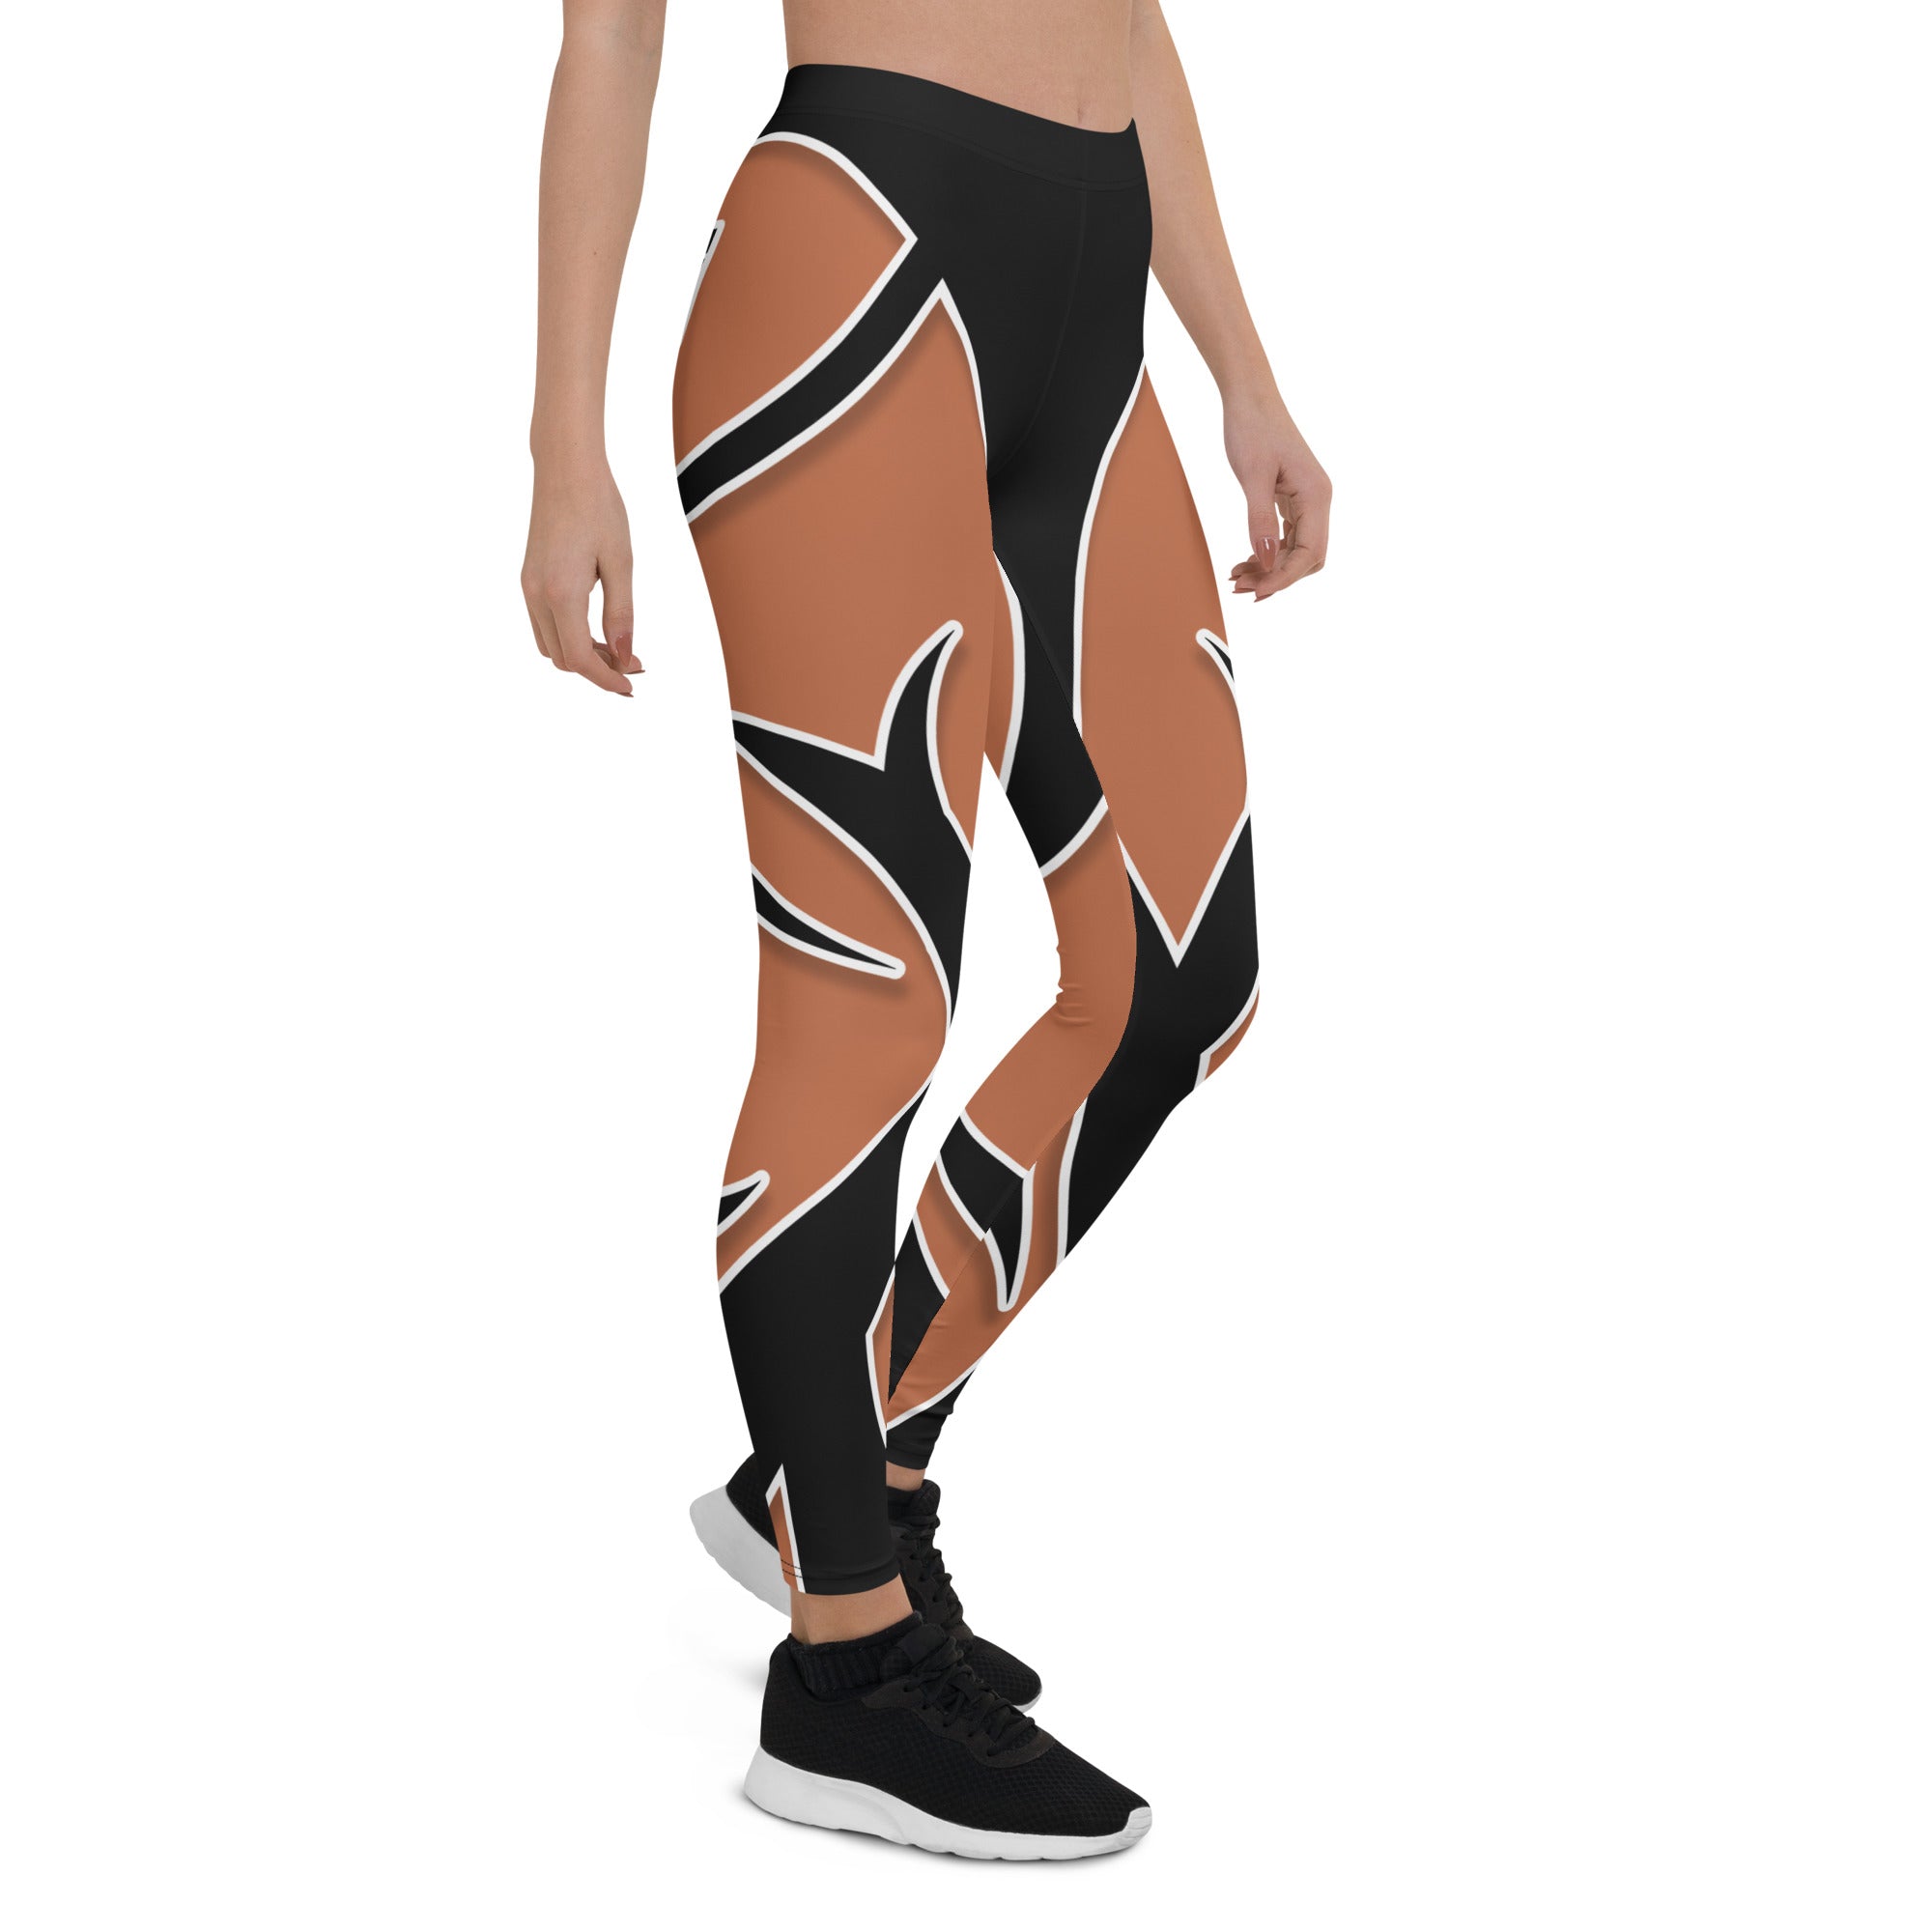 Hfyihgf High Waisted Yoga Pants for Women Running Workout Mesh Lace Panel  Side Leggings Squat Proof Tummy Control(Brown,XXL) - Walmart.com